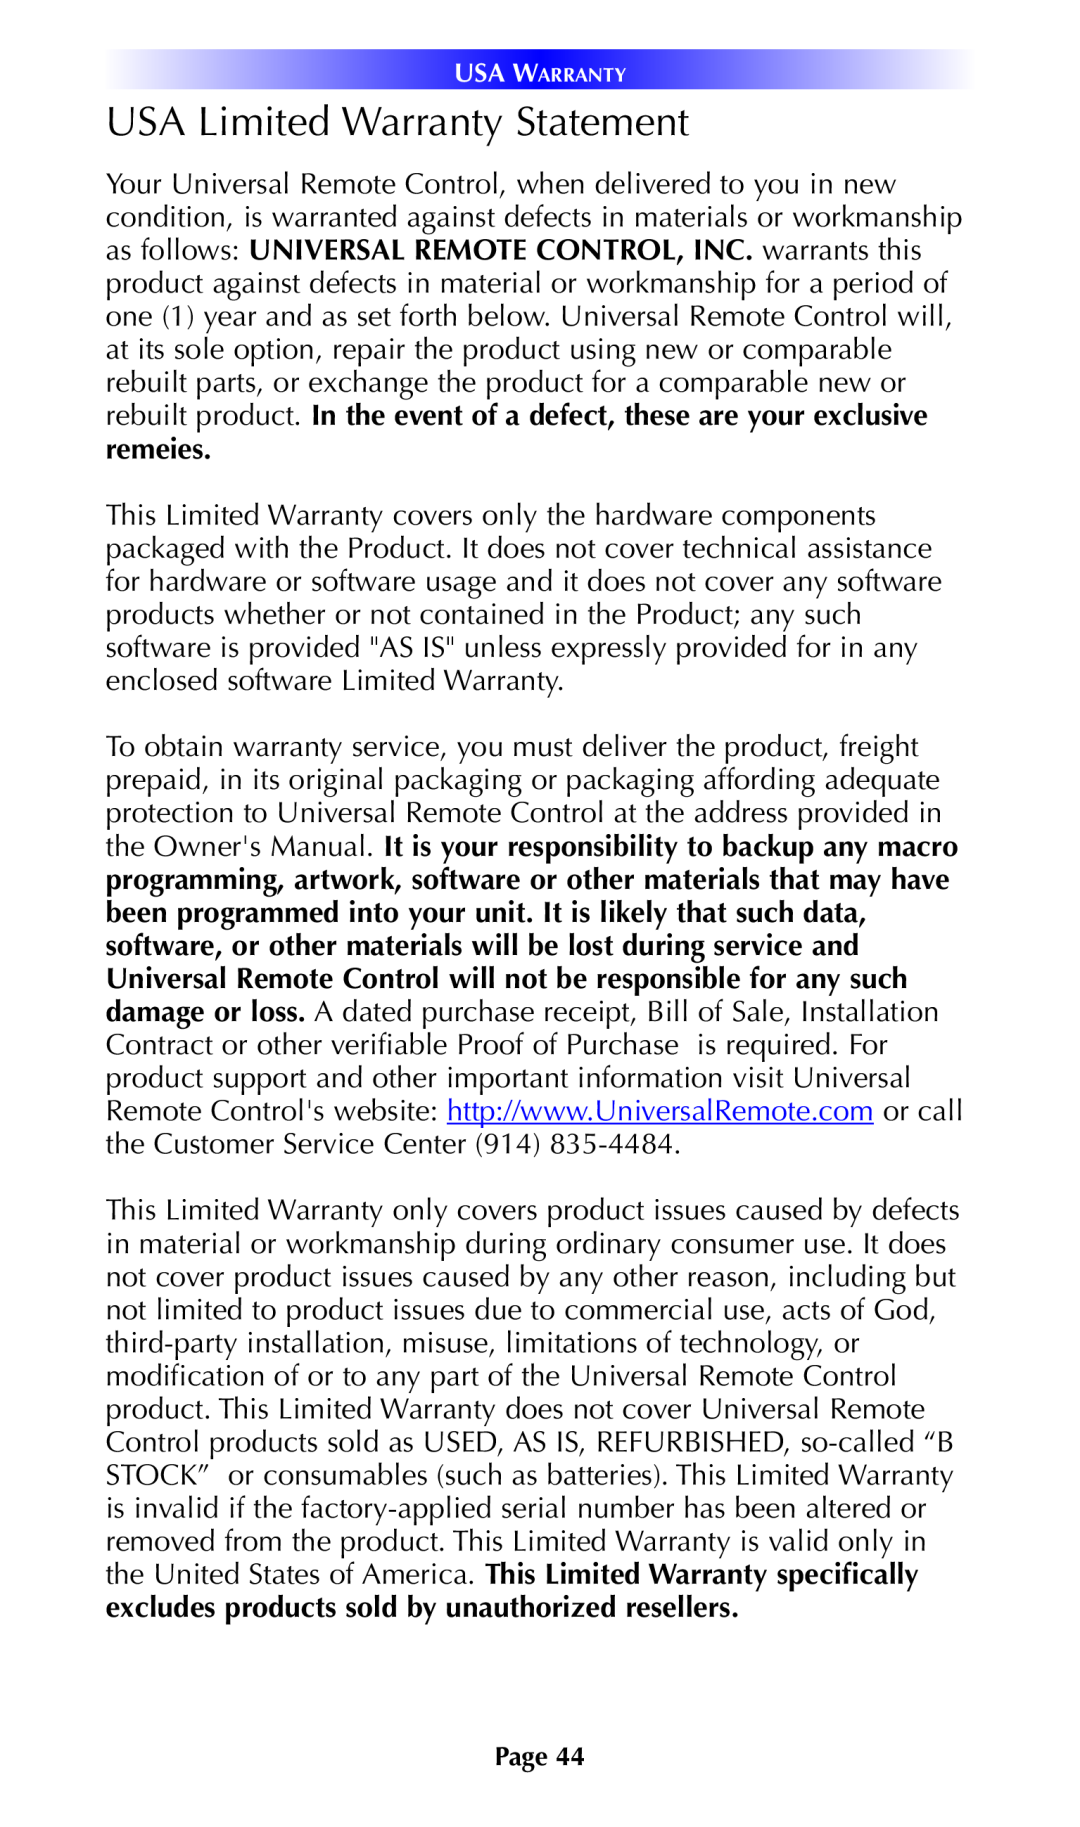 Universal Remote Control THZ-100 owner manual USA Limited Warranty Statement, Usa Warranty 